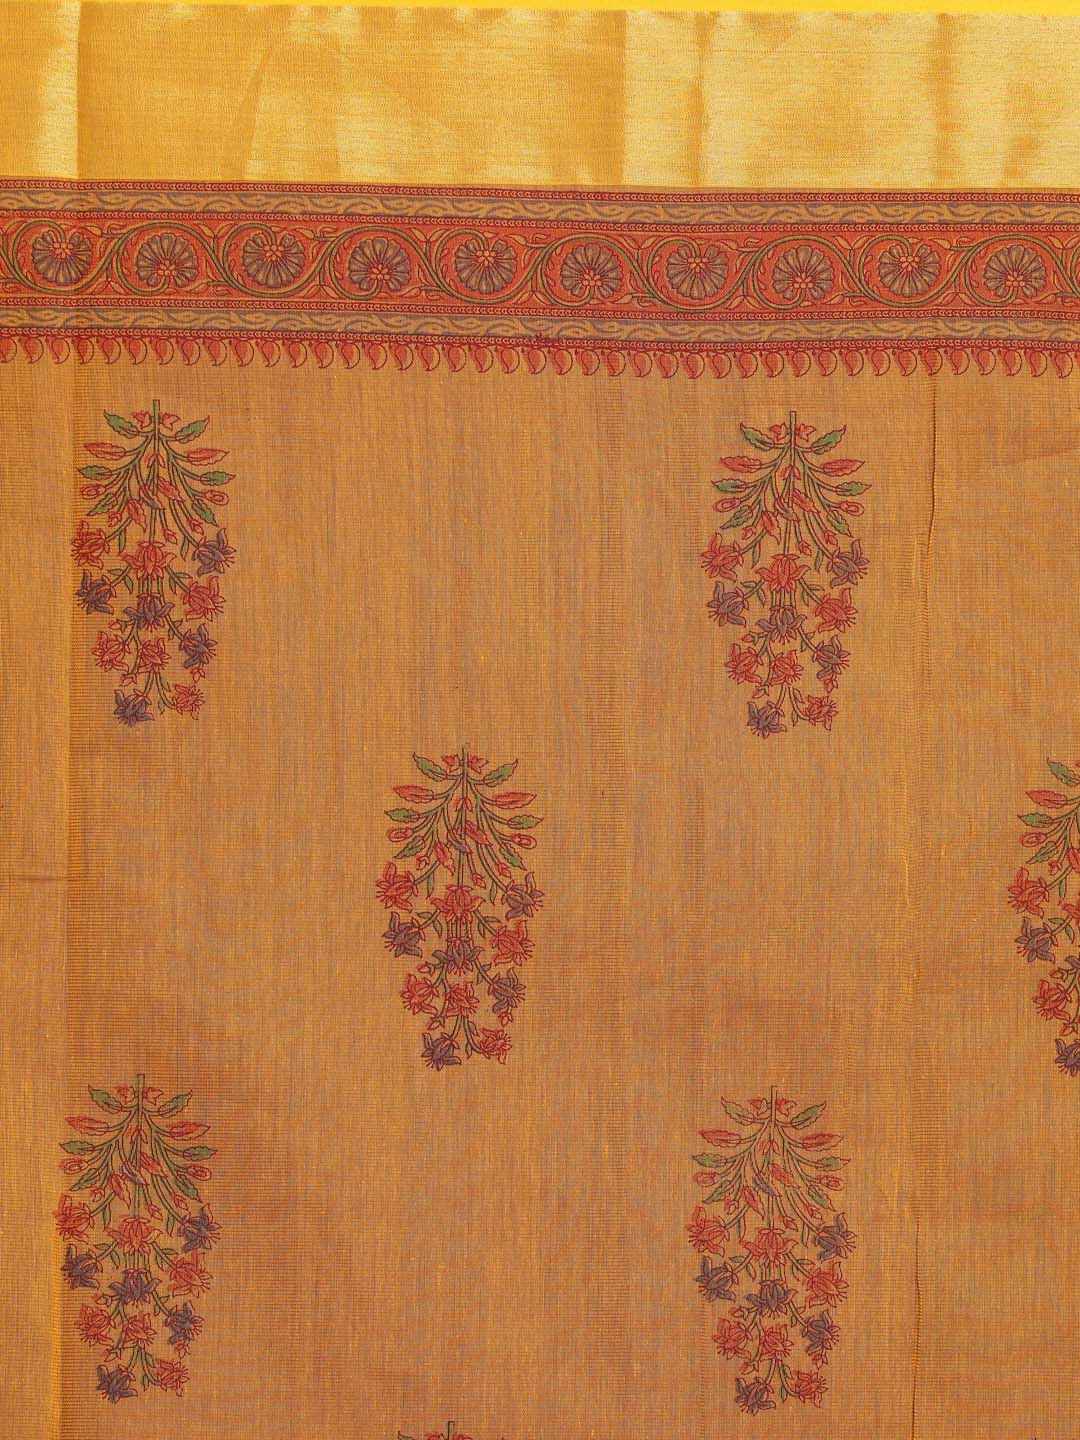 Indethnic Printed Cotton Blend Saree in Mustard - Saree Detail View